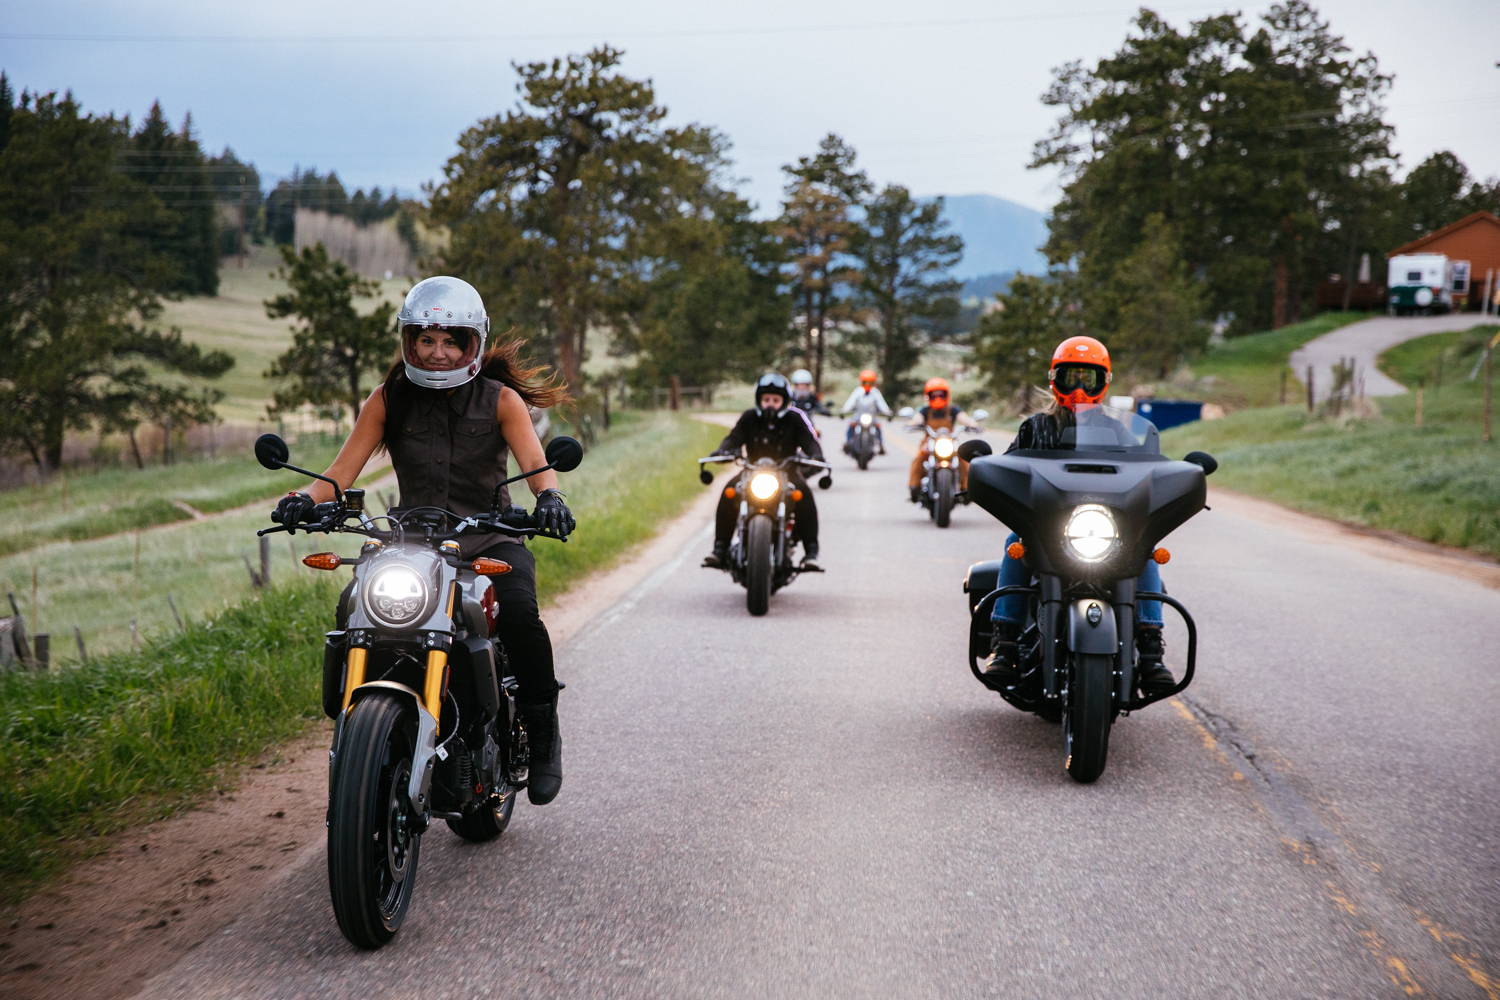 Ride Wild motorcycles